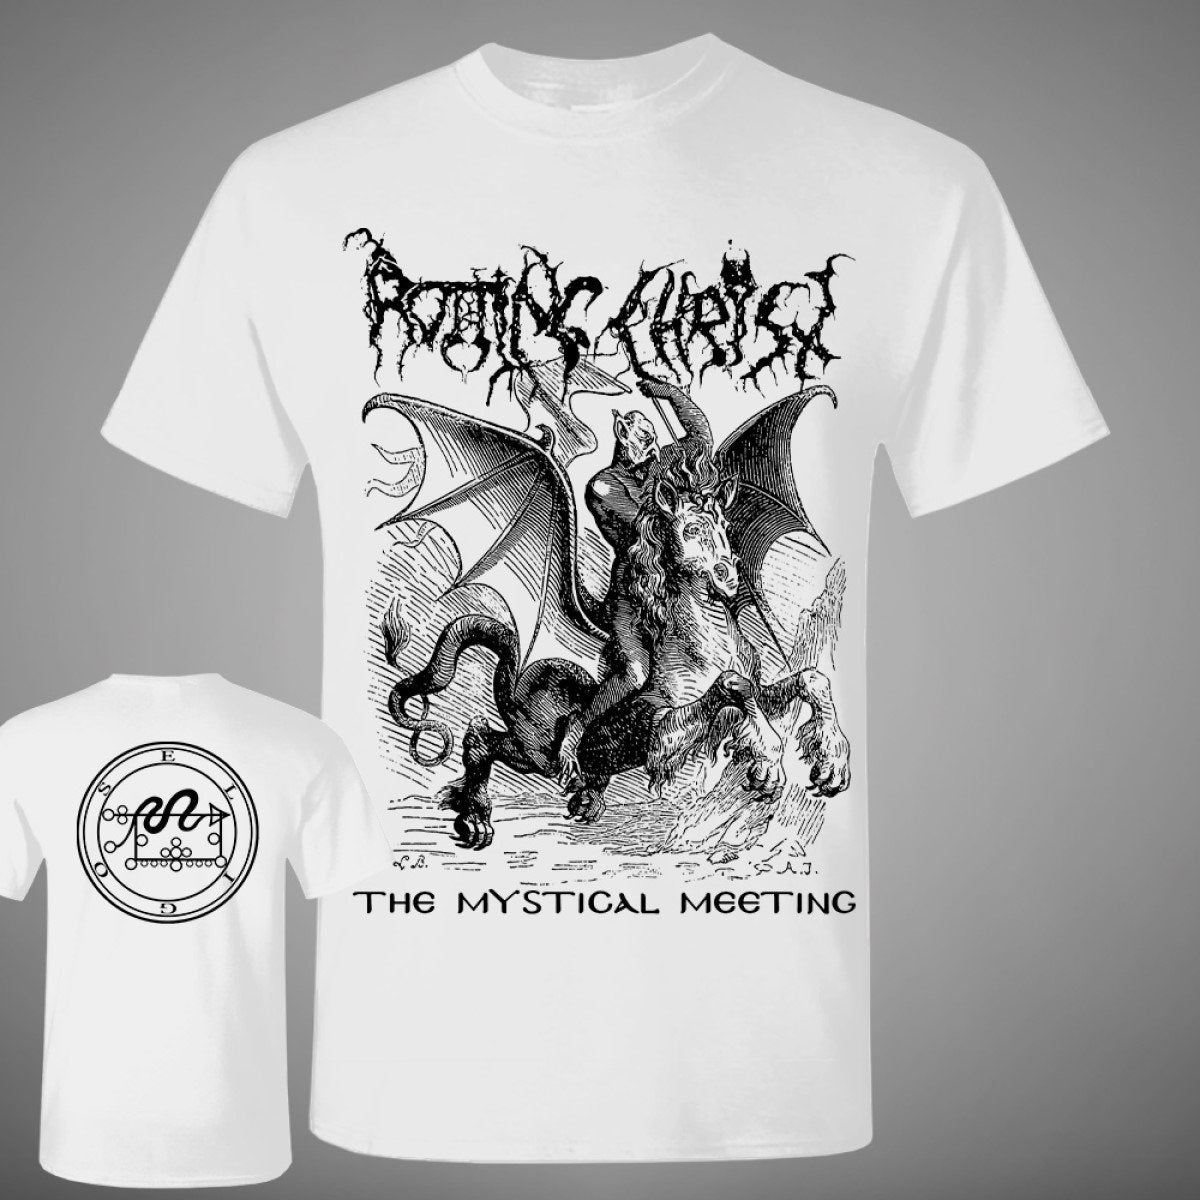 Rotting Christ "The Mystical Meeting" T shirt